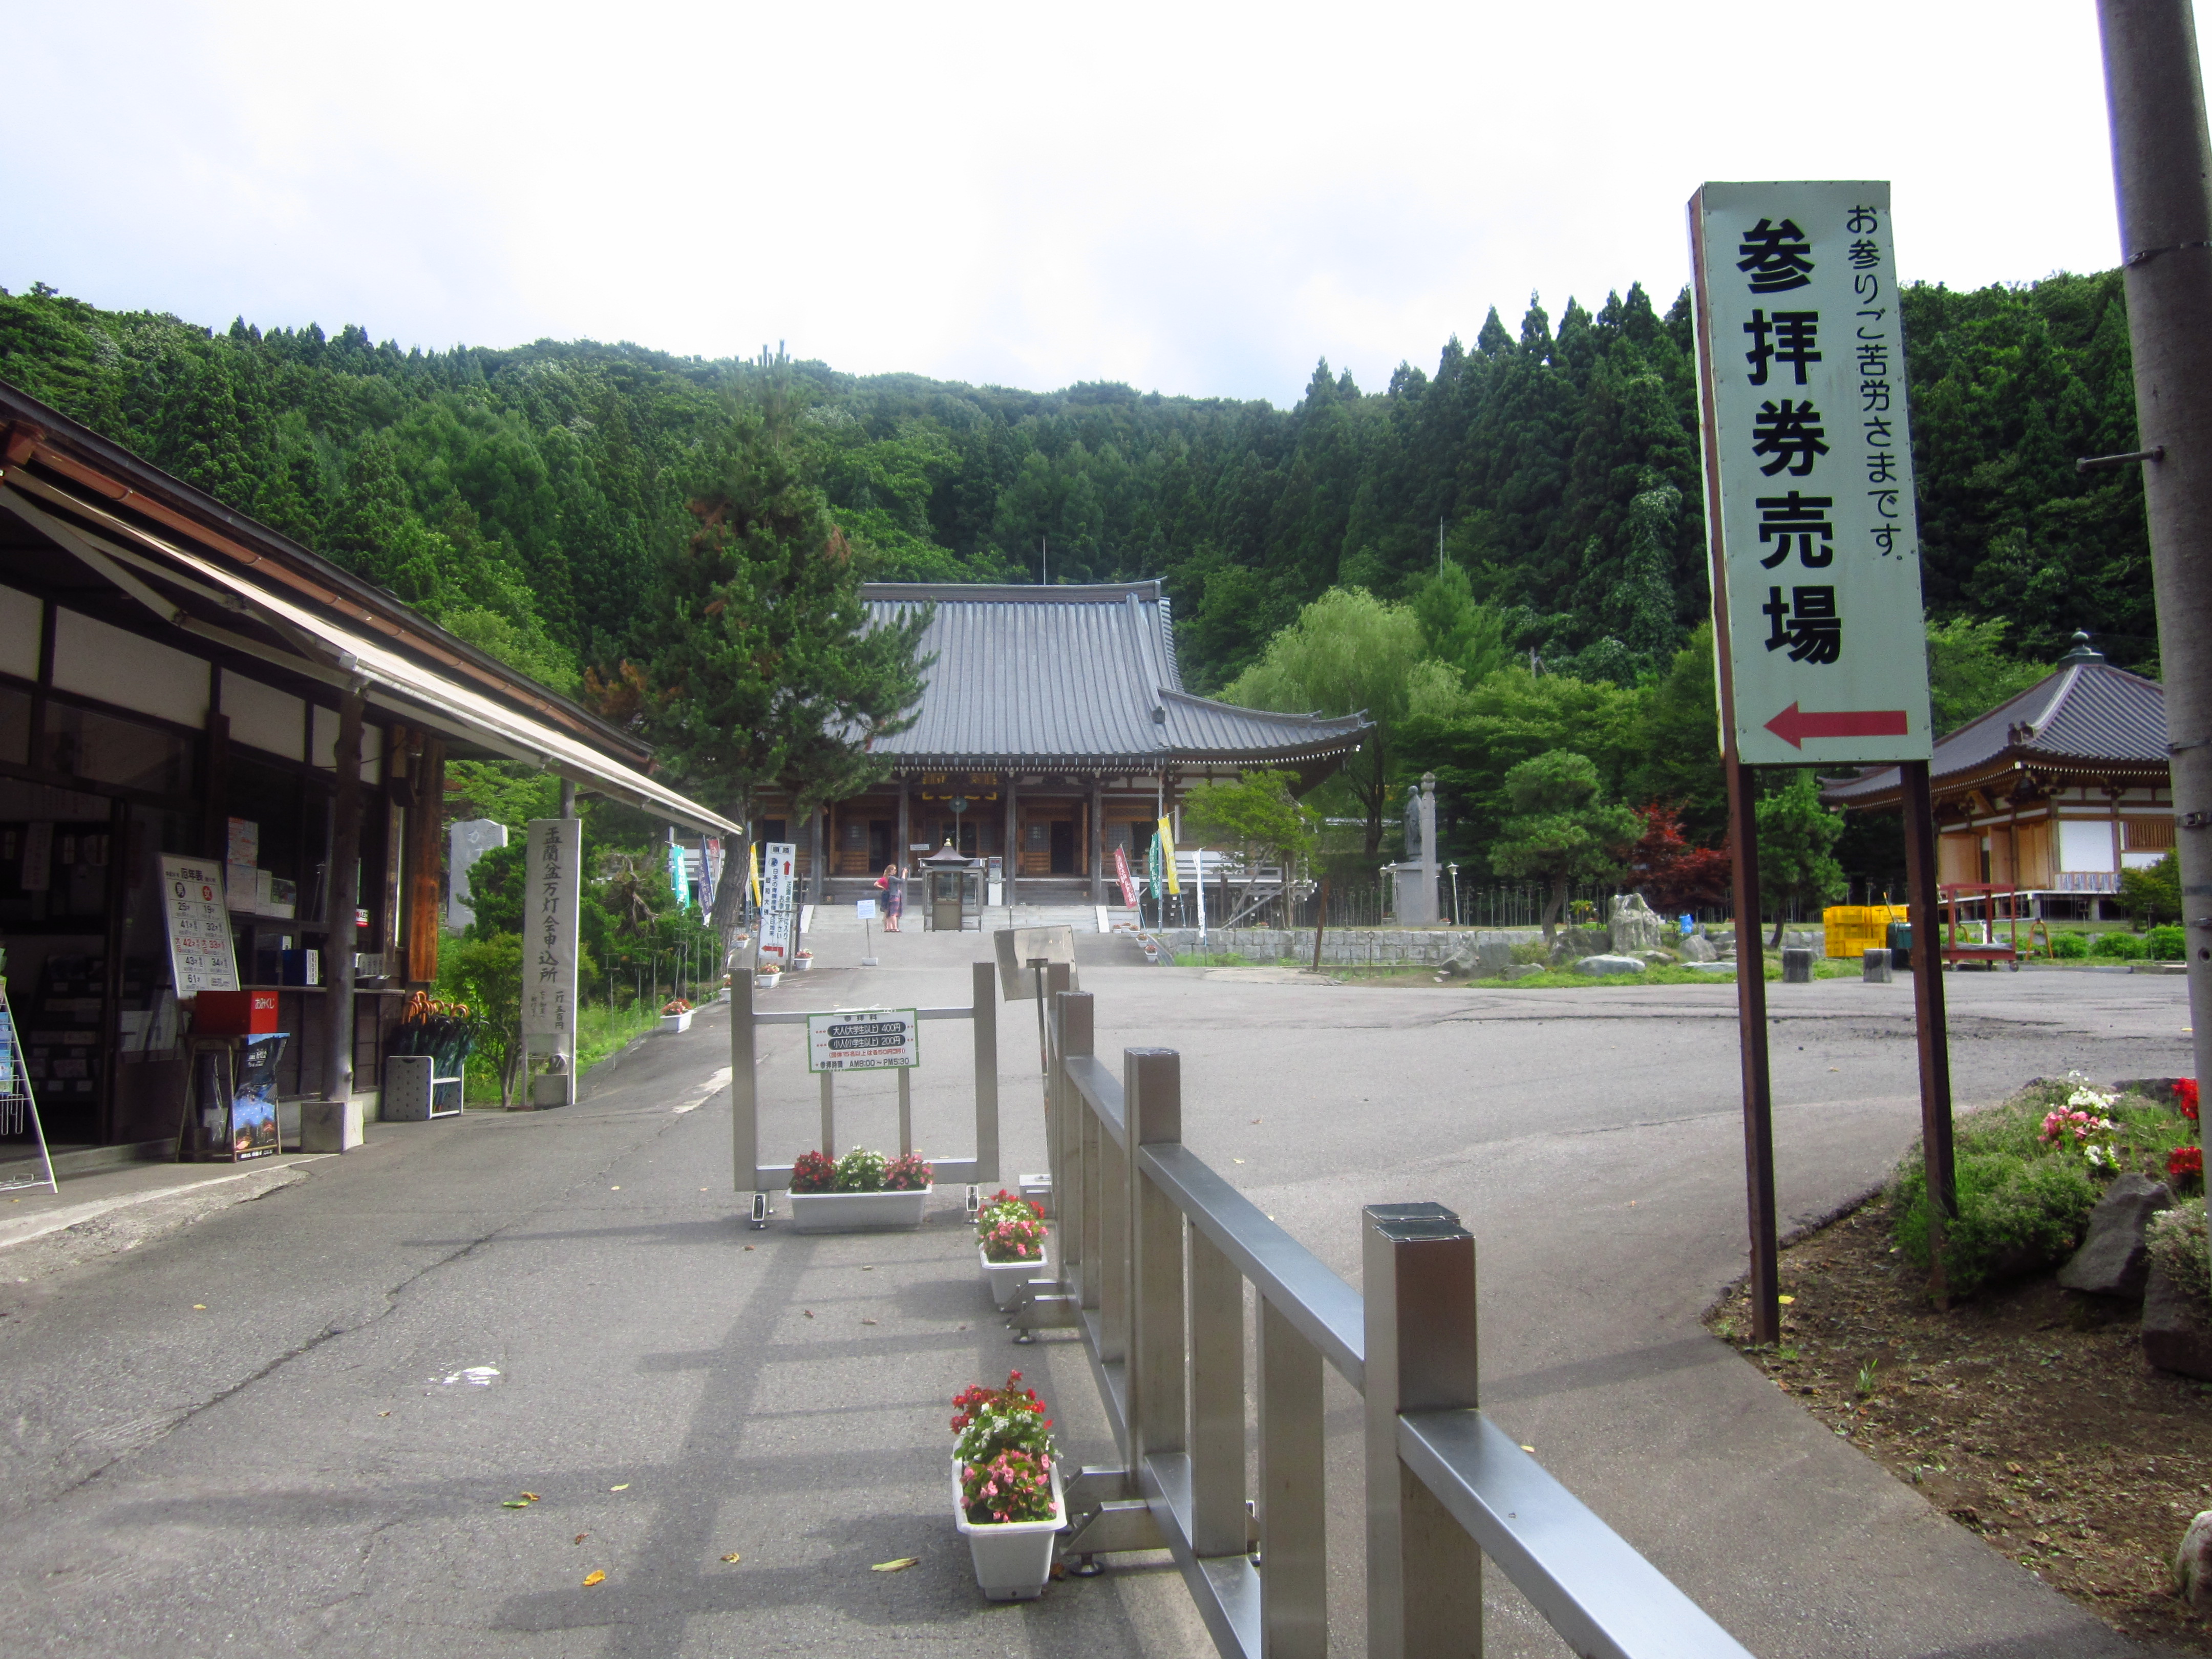 fwertfe - 外国人観光客に人気の高山稲荷神社